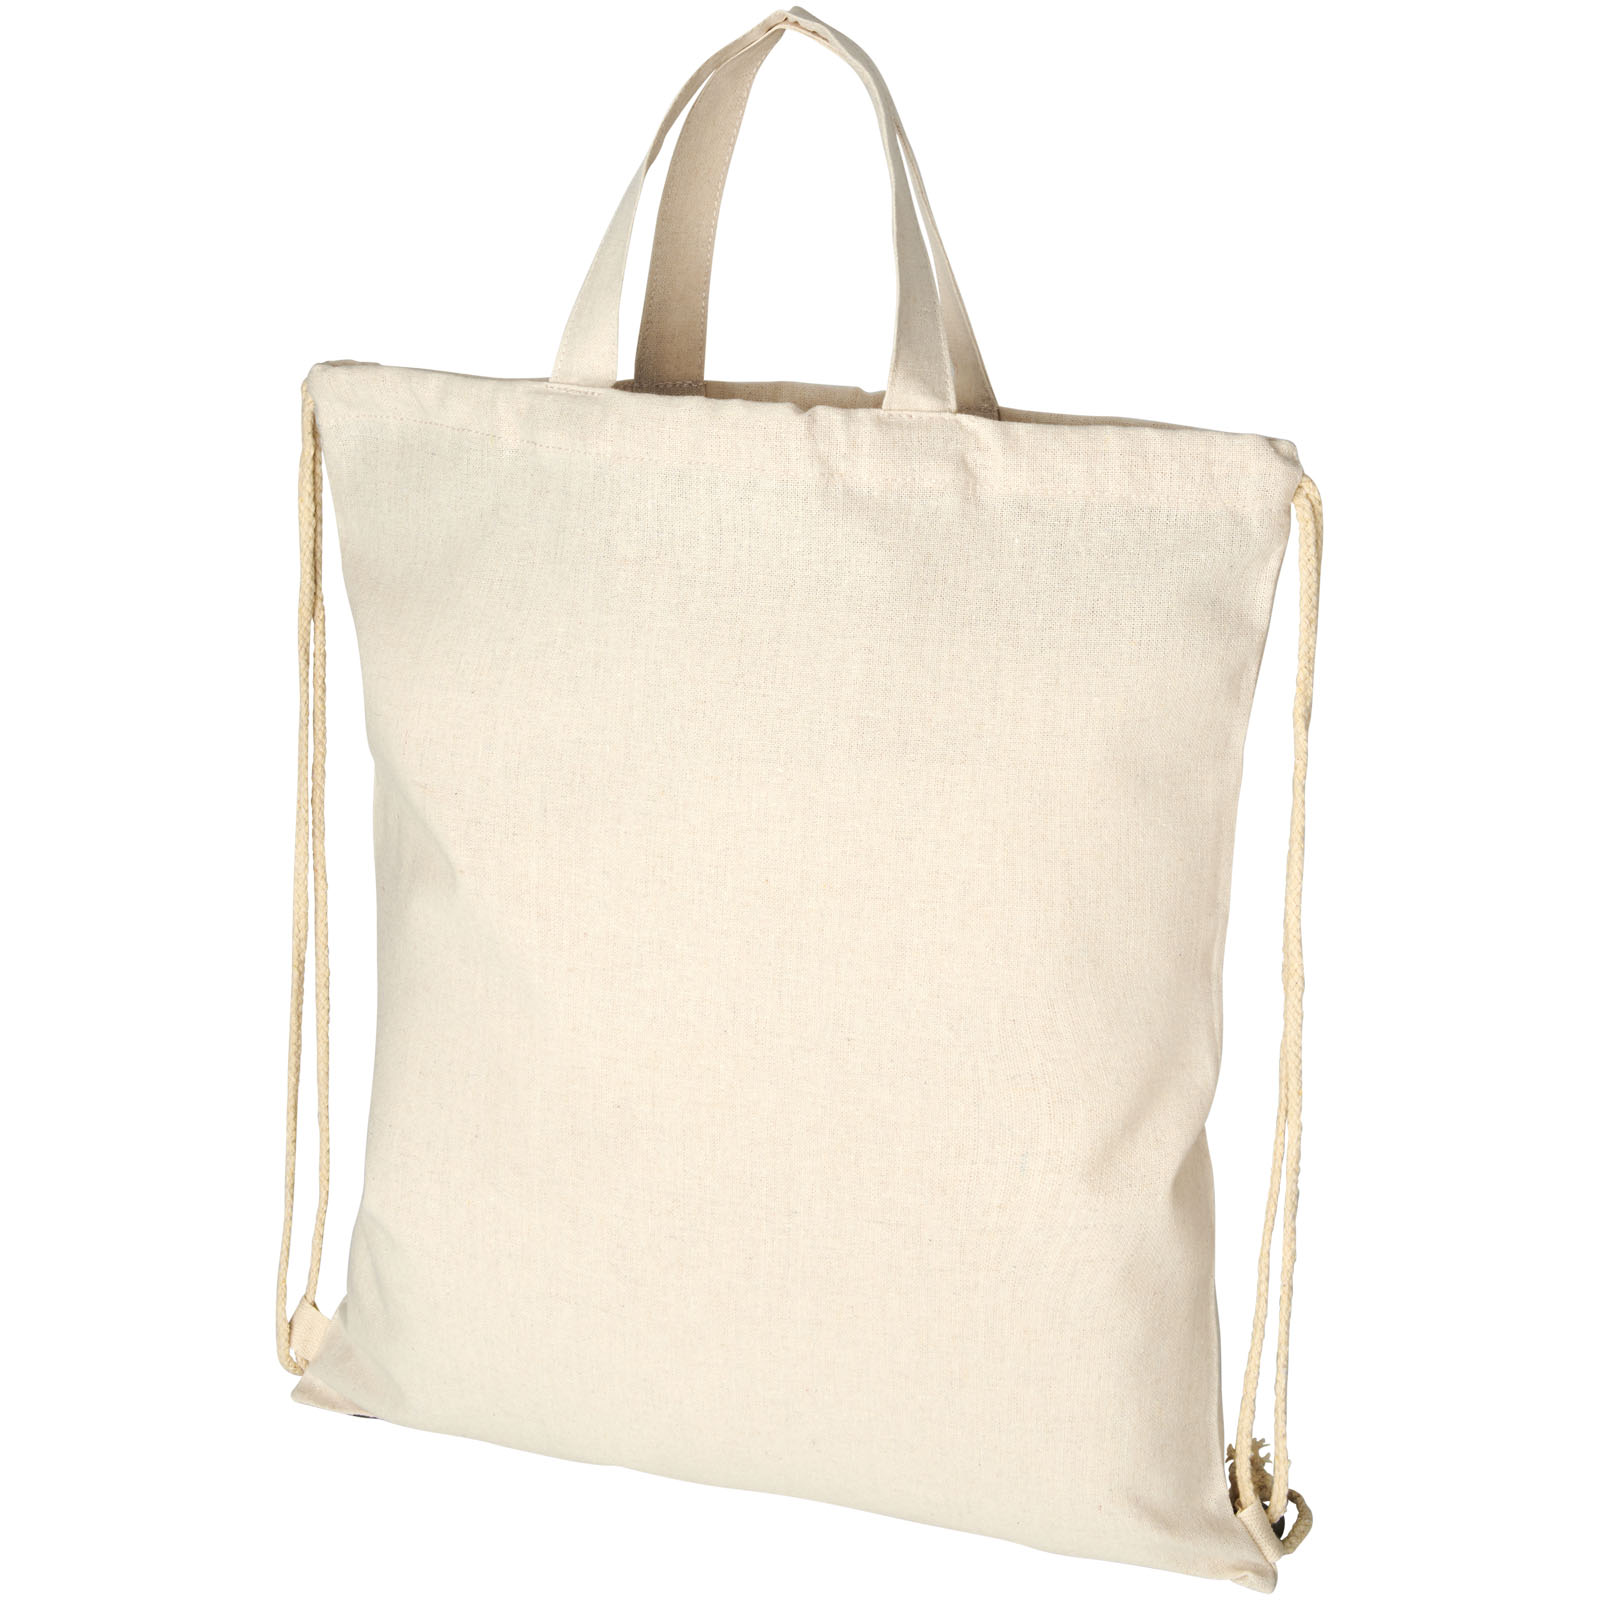 Drawstring Bags - Pheebs 210 g/m² recycled drawstring bag 6L